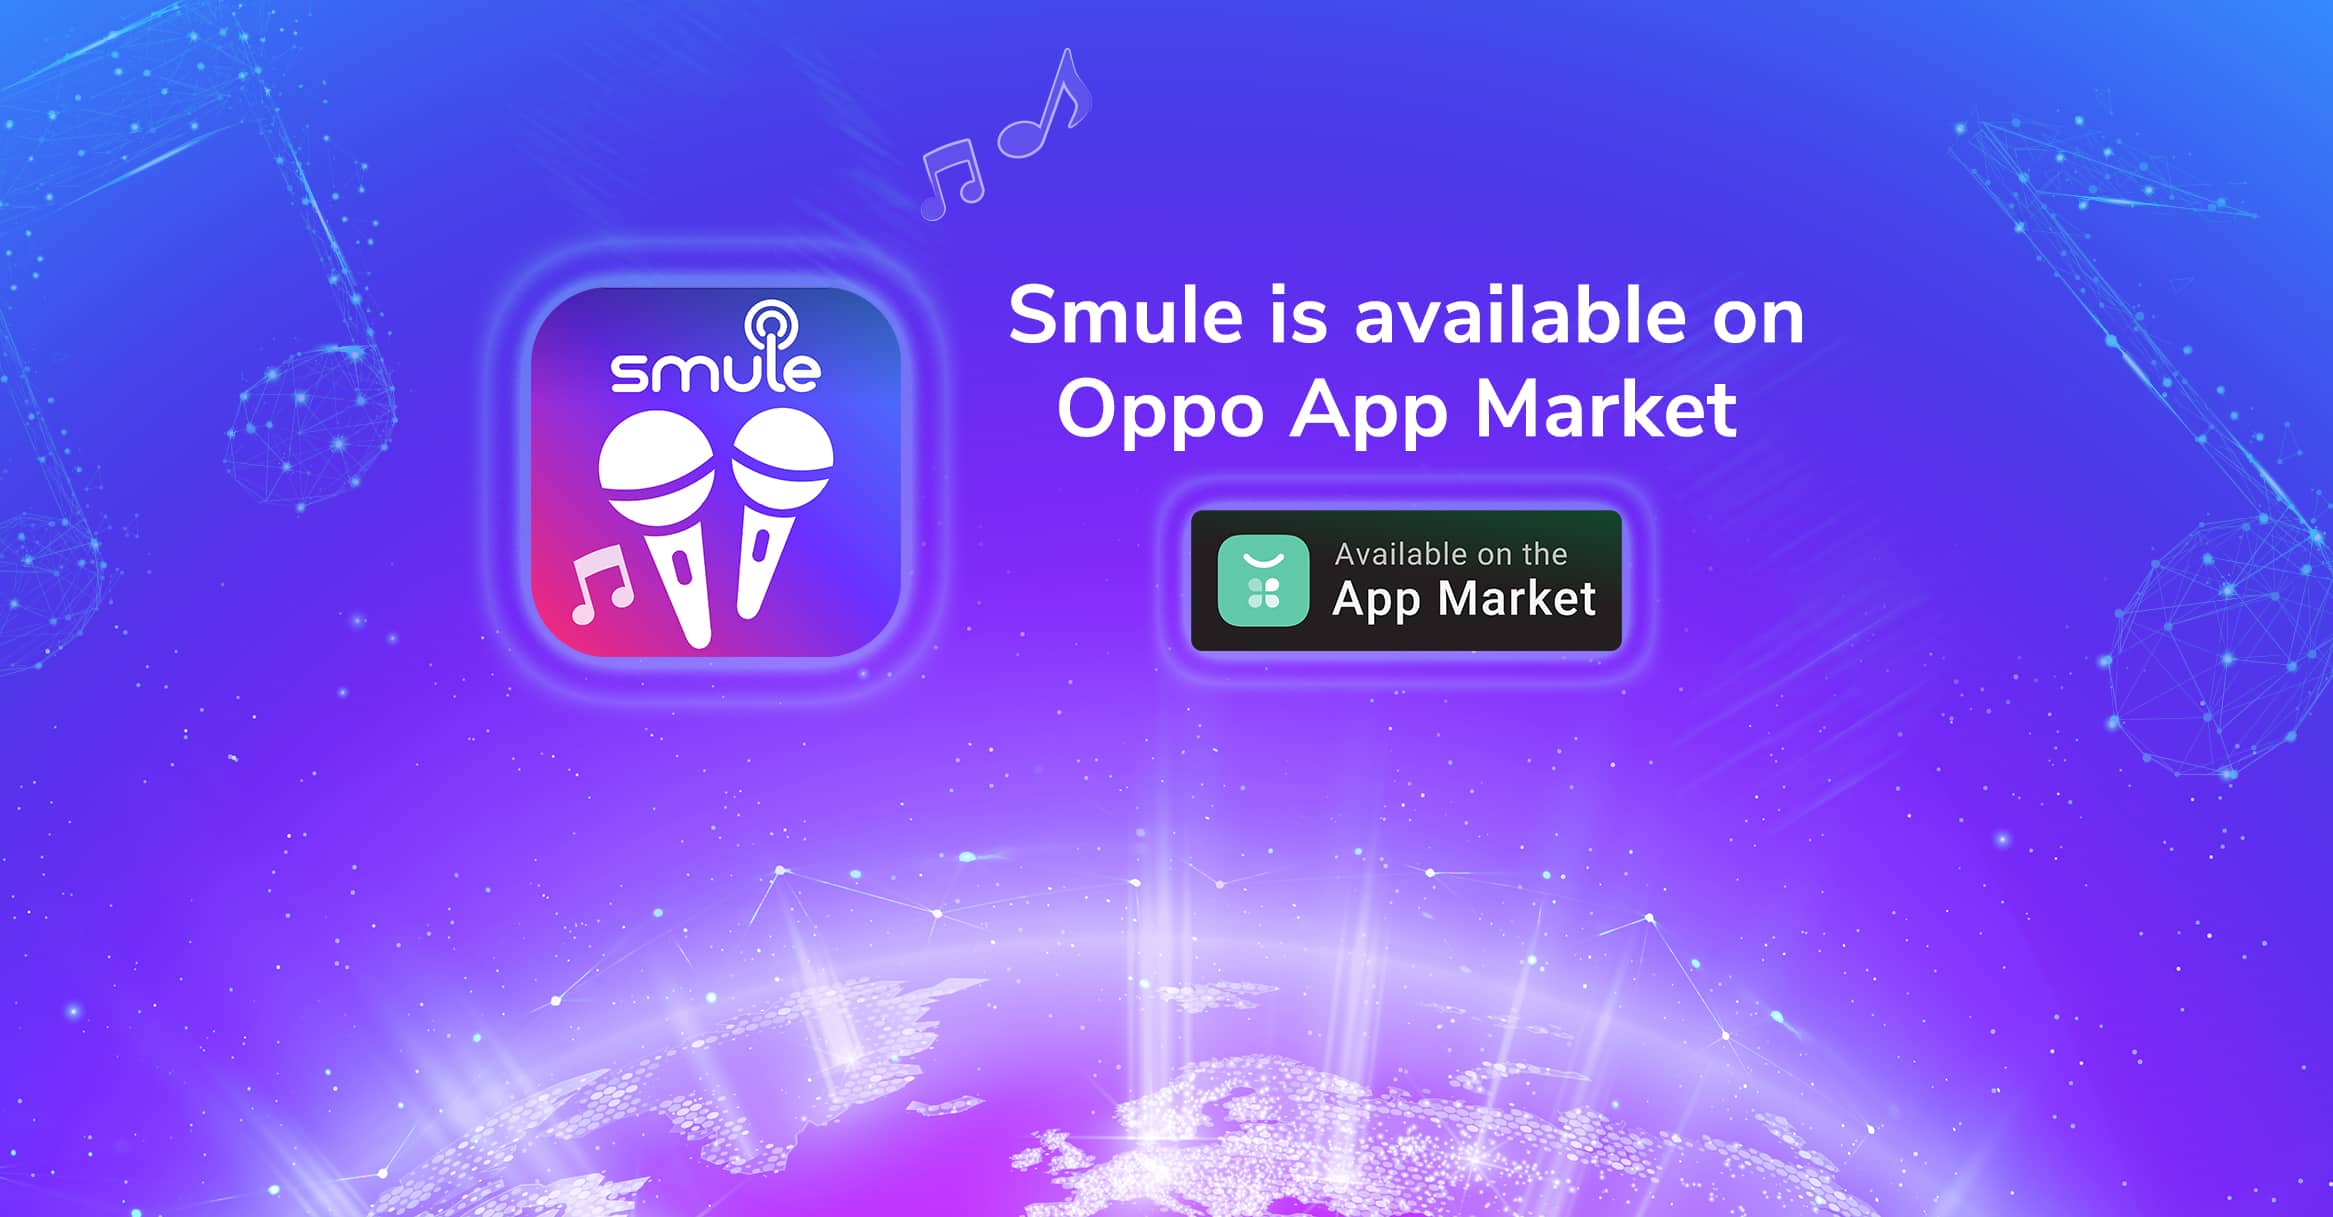 Smule On The Oppo App Market